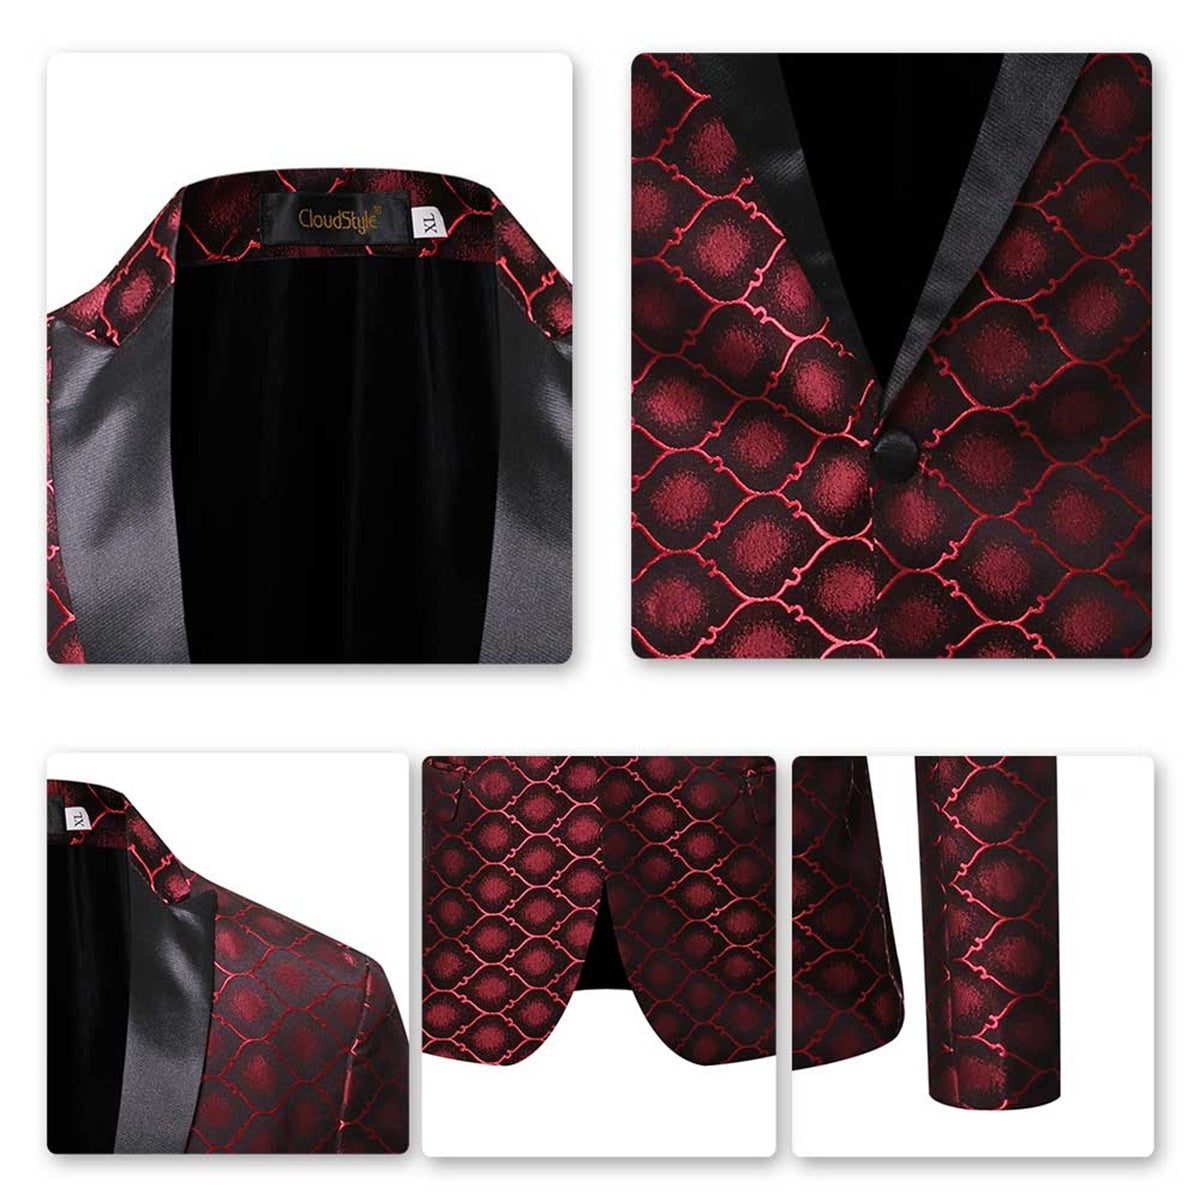 Men's Fashion Fish Scales 2-Piece Suit Red